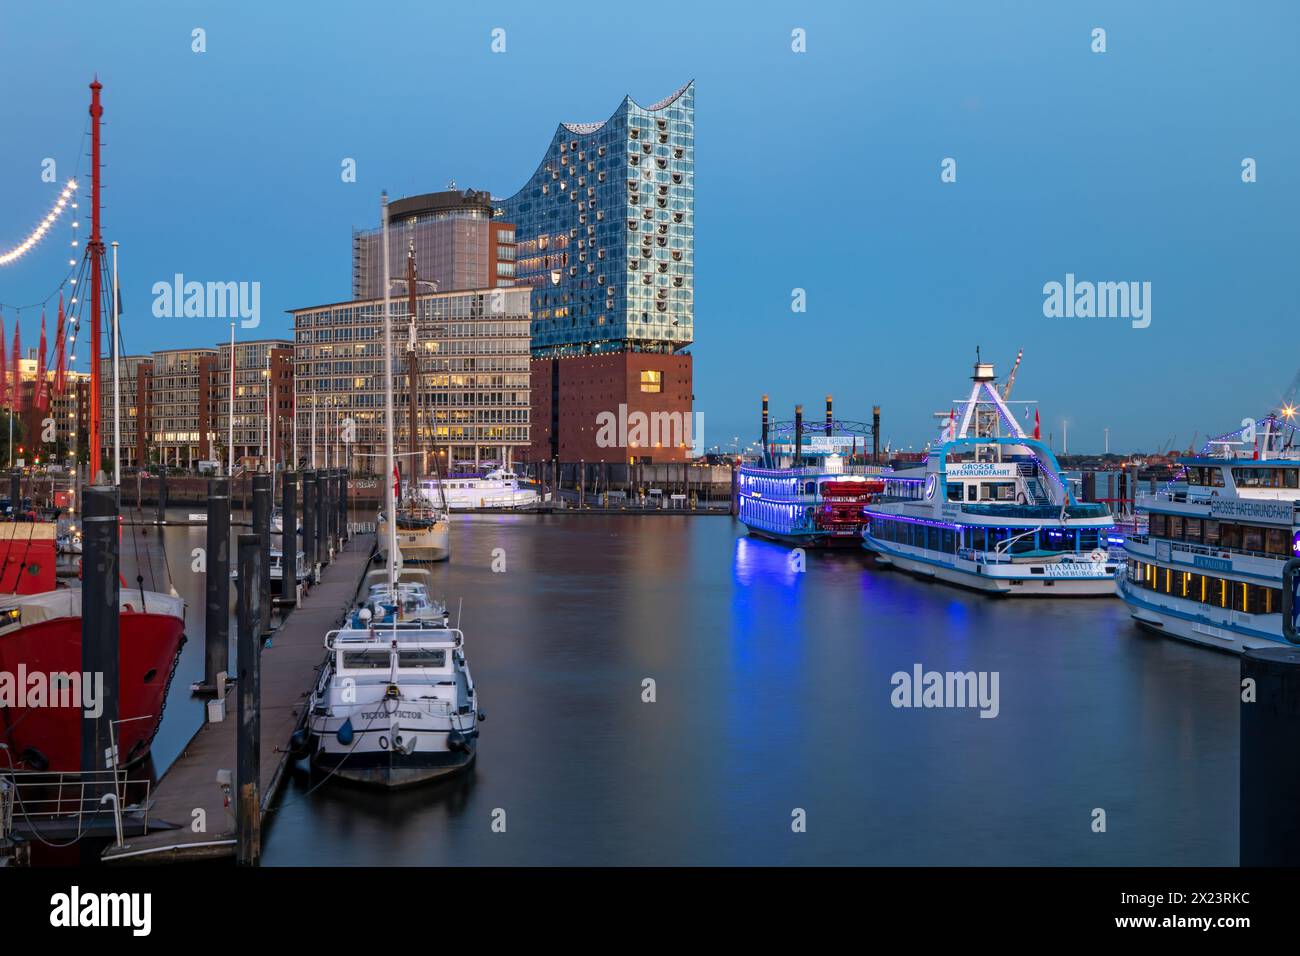 Elbphilharmonie in the evening, Hamburg, Germany Stock Photo